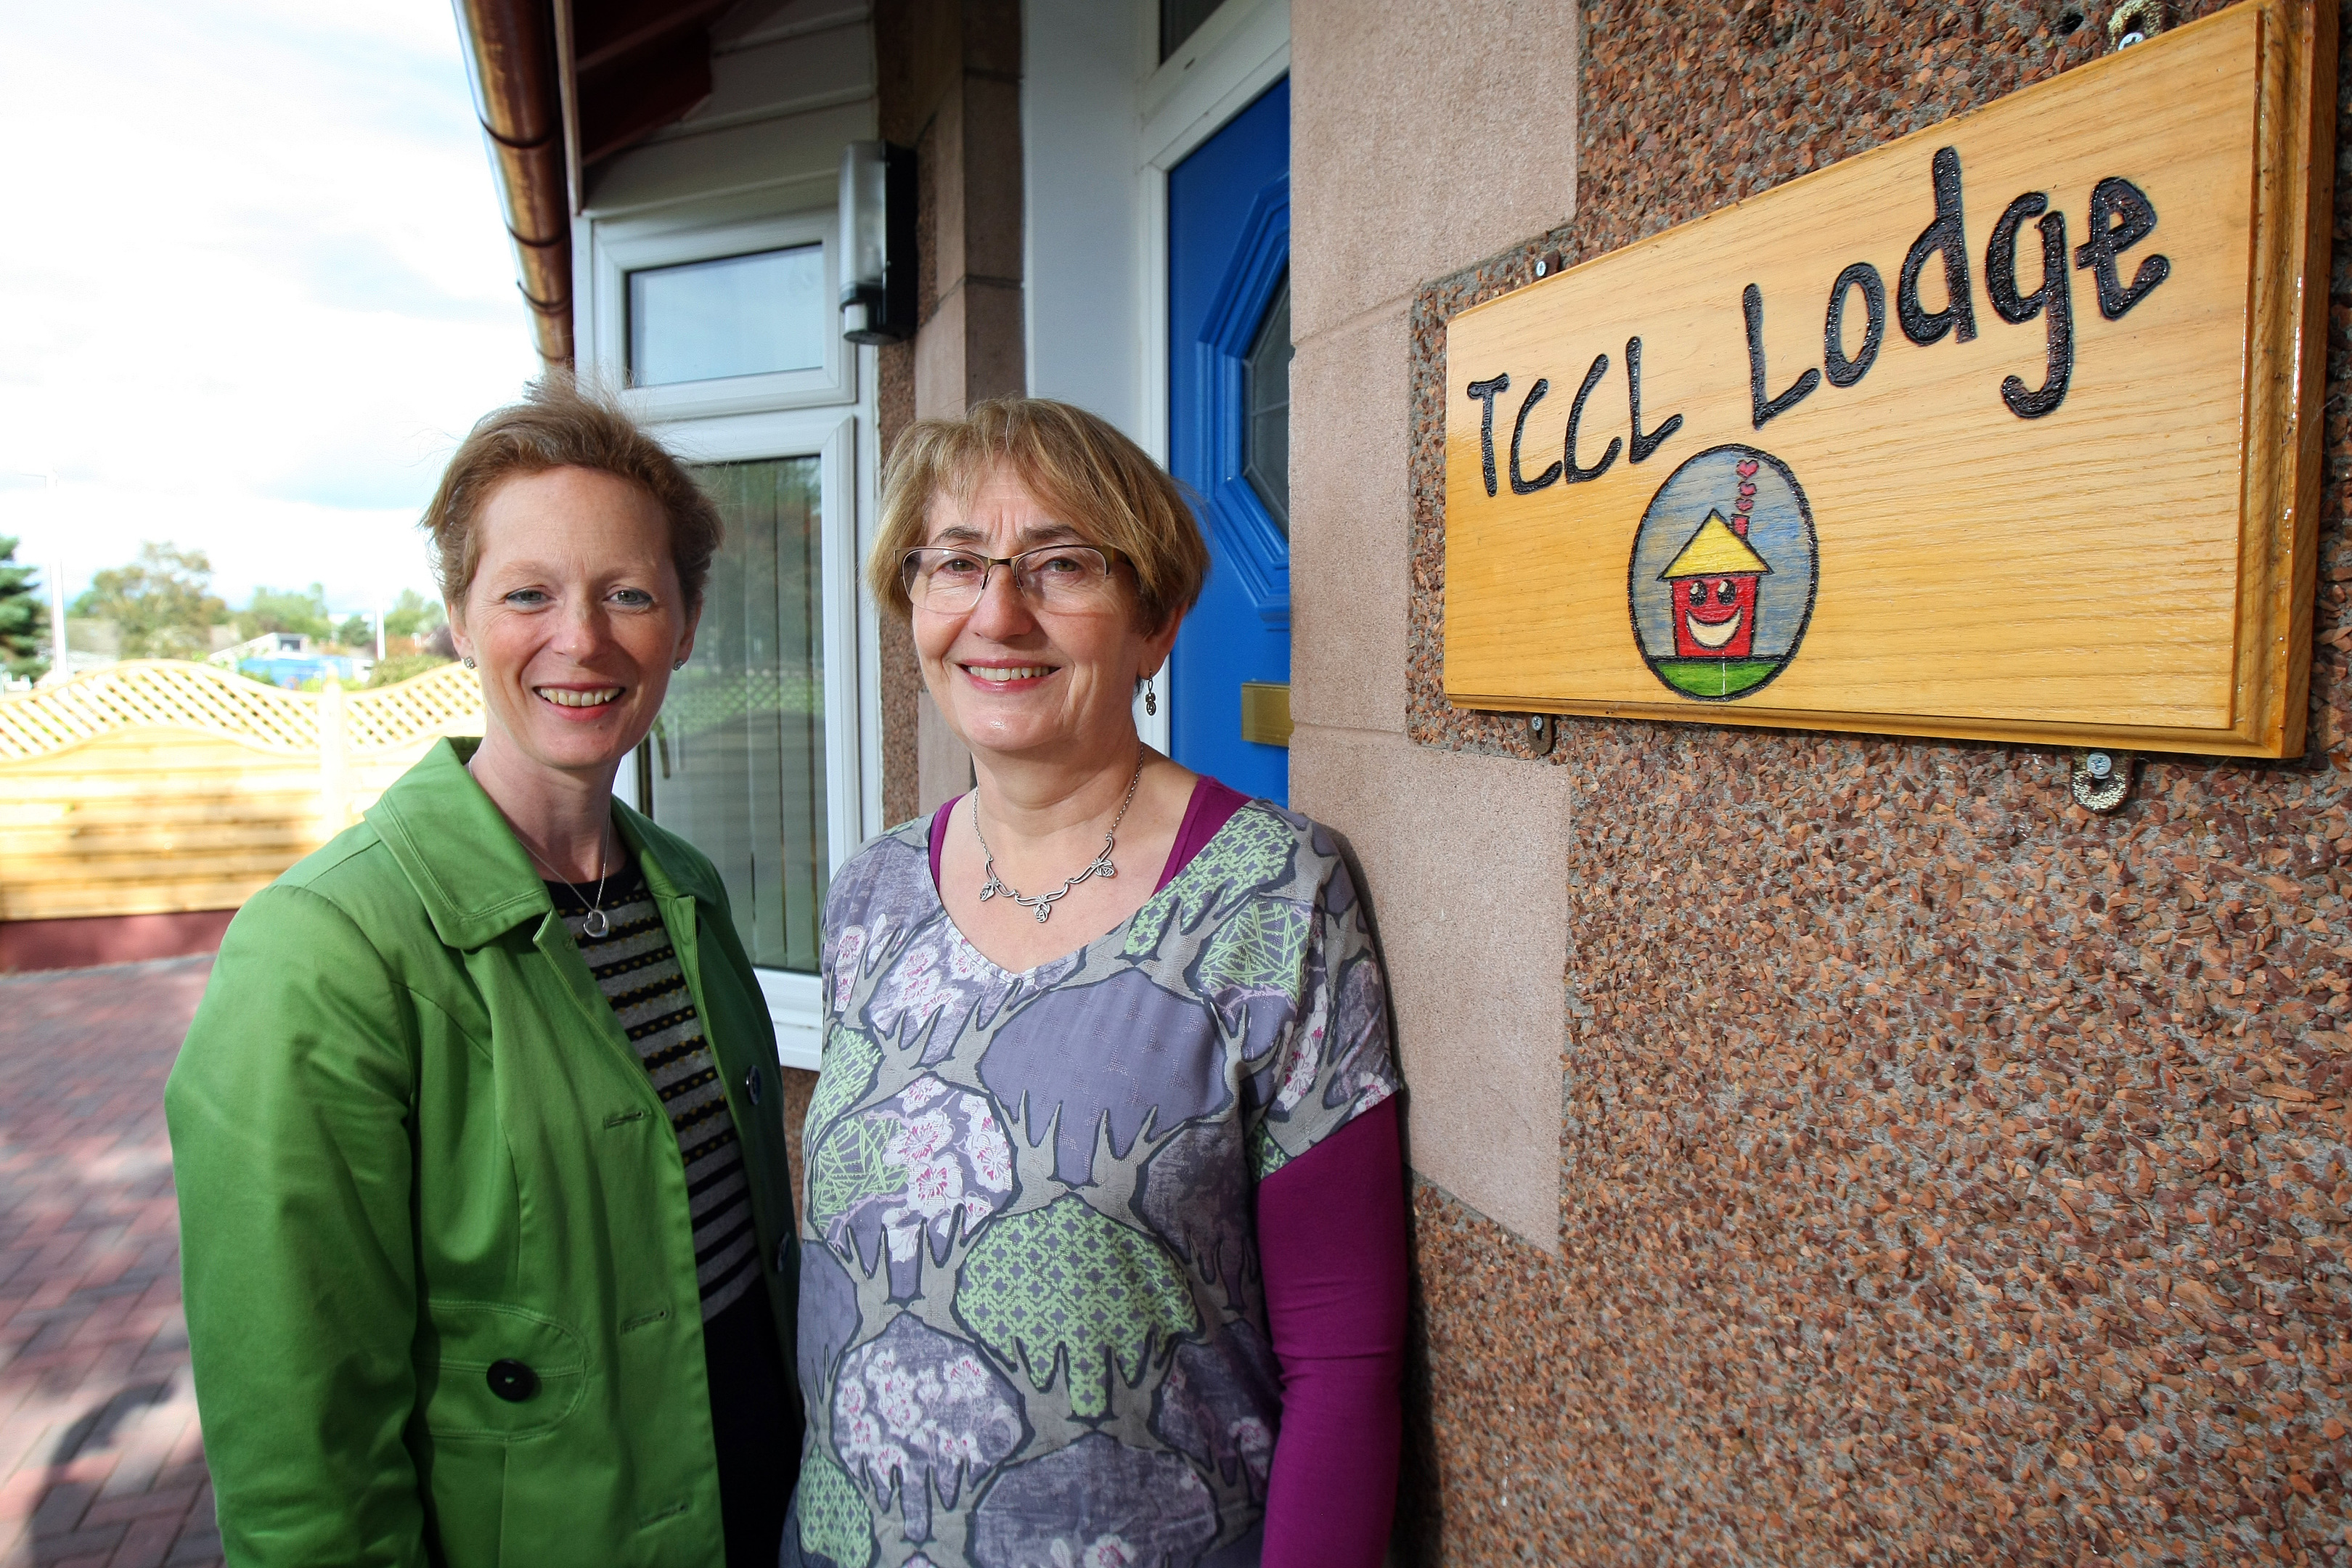 Biz Logan (left) and Dr Rosalie Wilkie outside TCCL Lodge